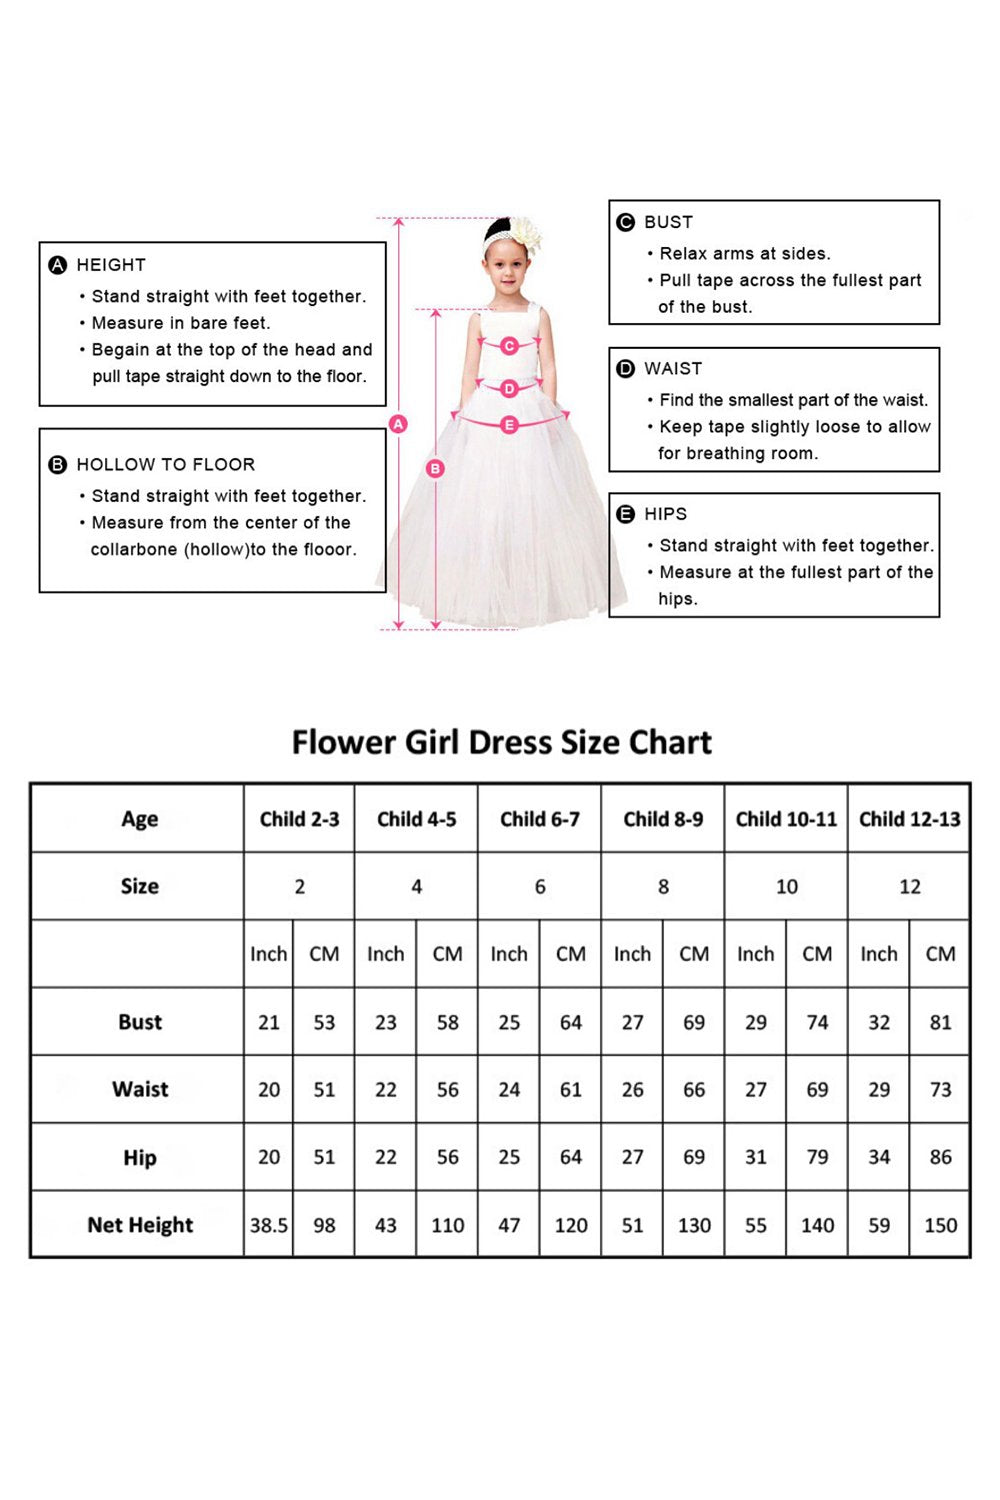 Ball Gown Floor Length Tulle Lace Flower Girl Dress CF0336